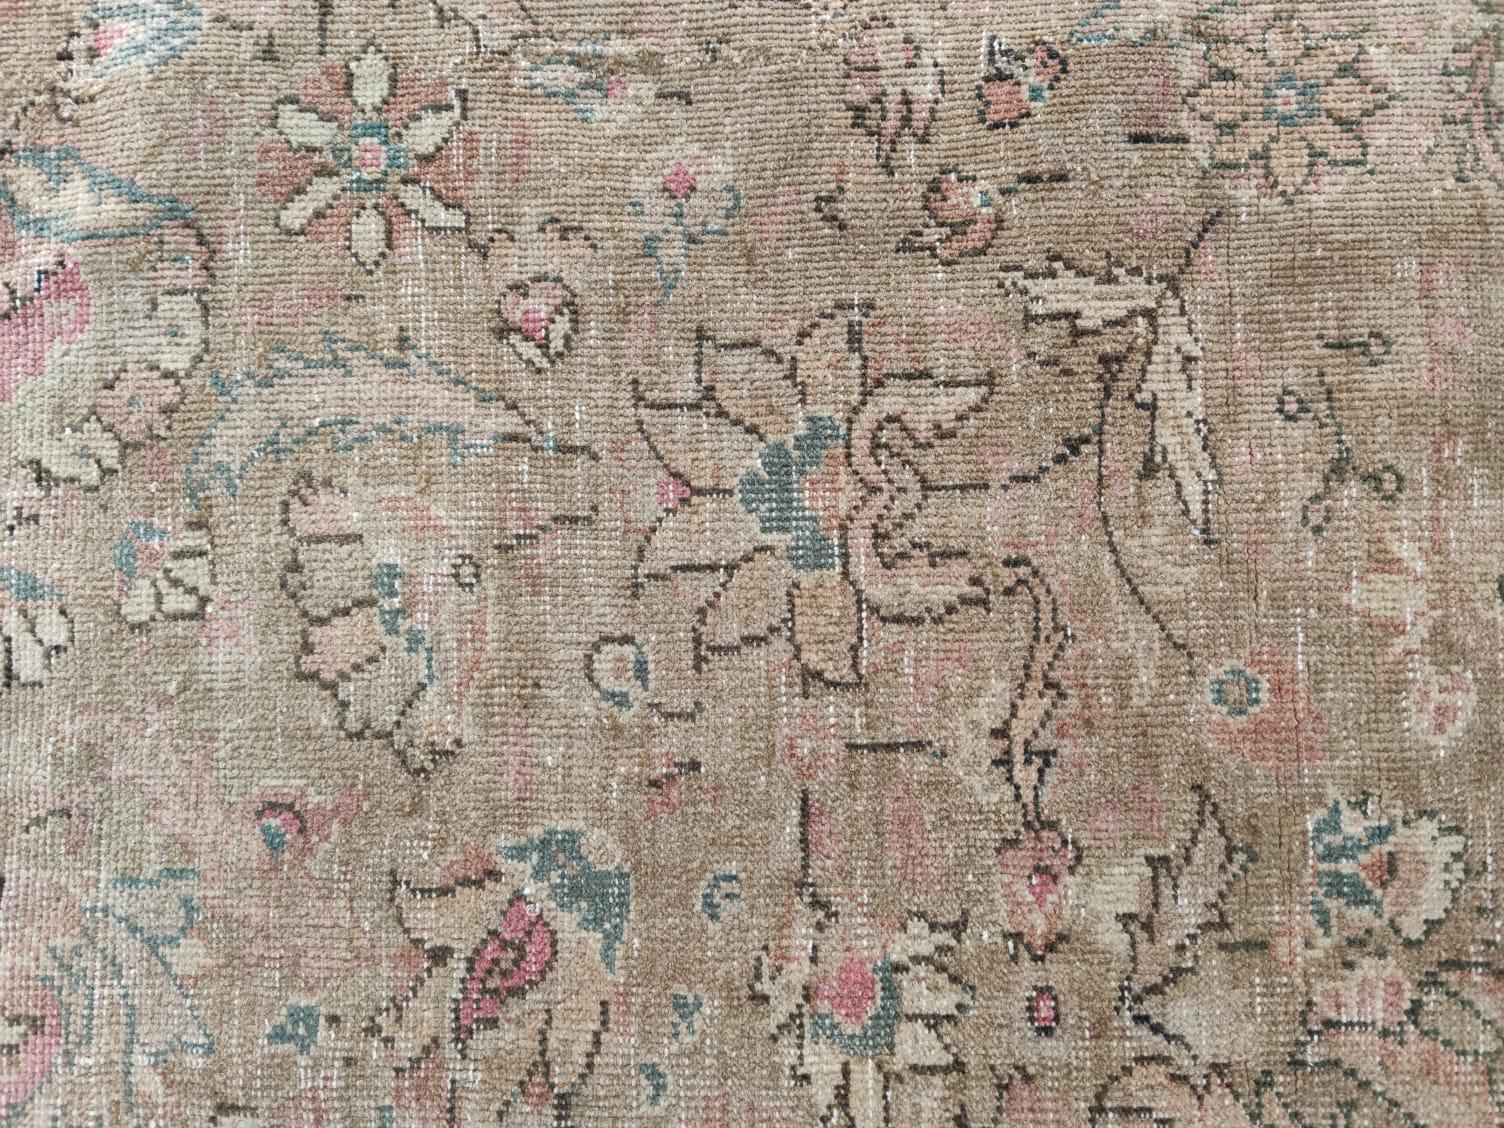 8.5x11 Ft Vintage Handmade Floral Pattern Turkish Wool Area Rug in Tawny Brown 1